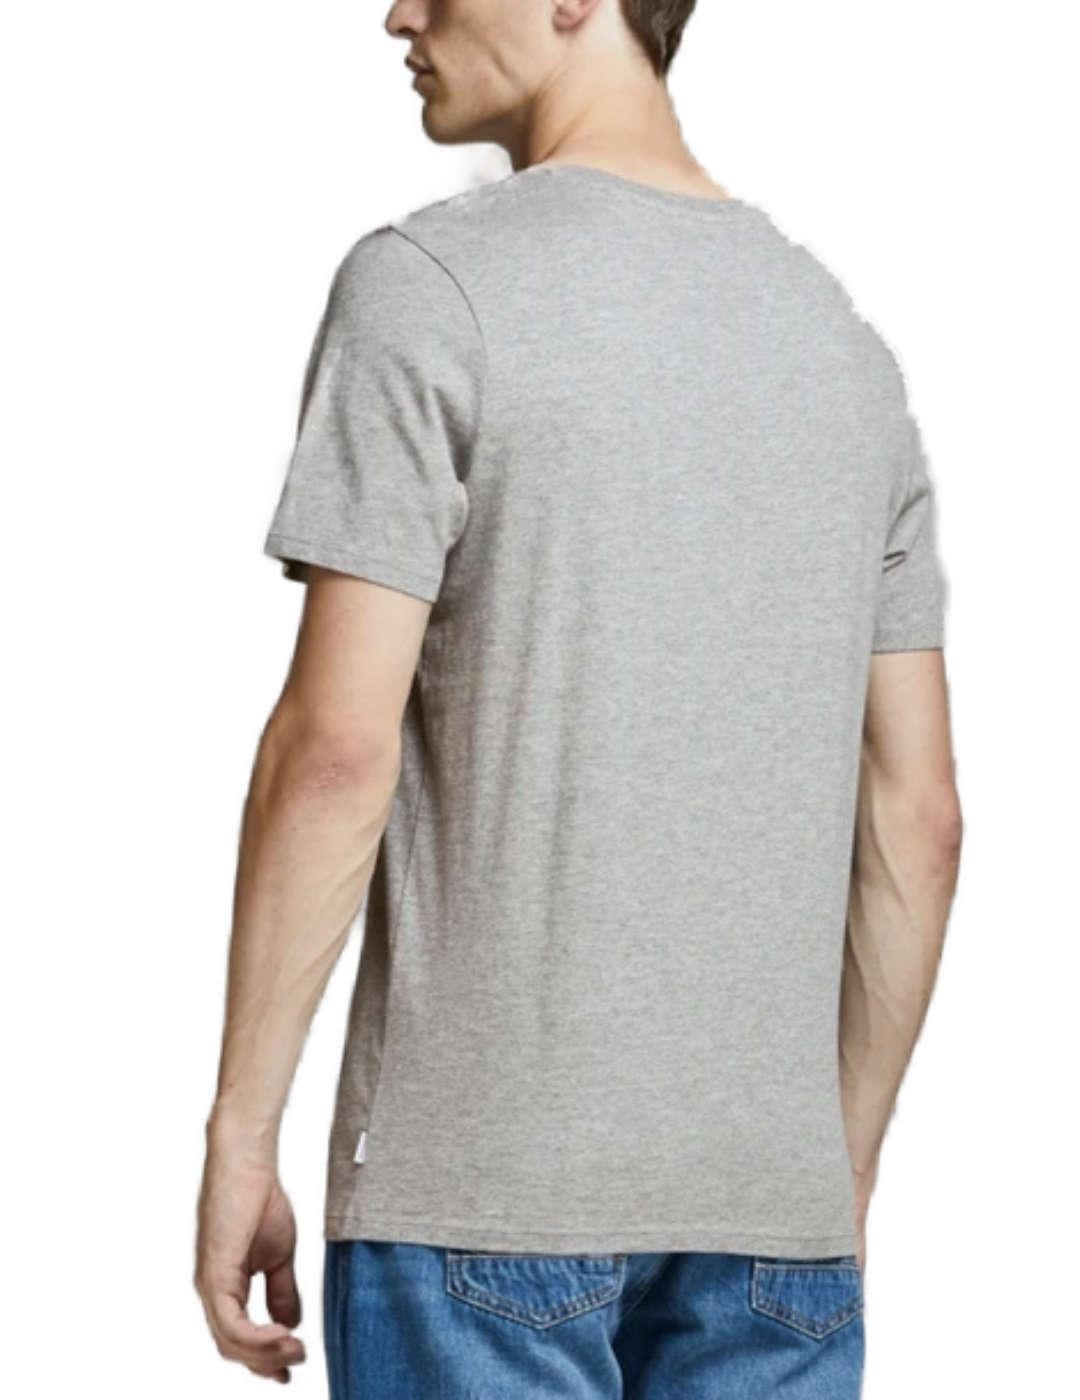 Camiseta Jack&Jones Organic gris claro manga corta hombre